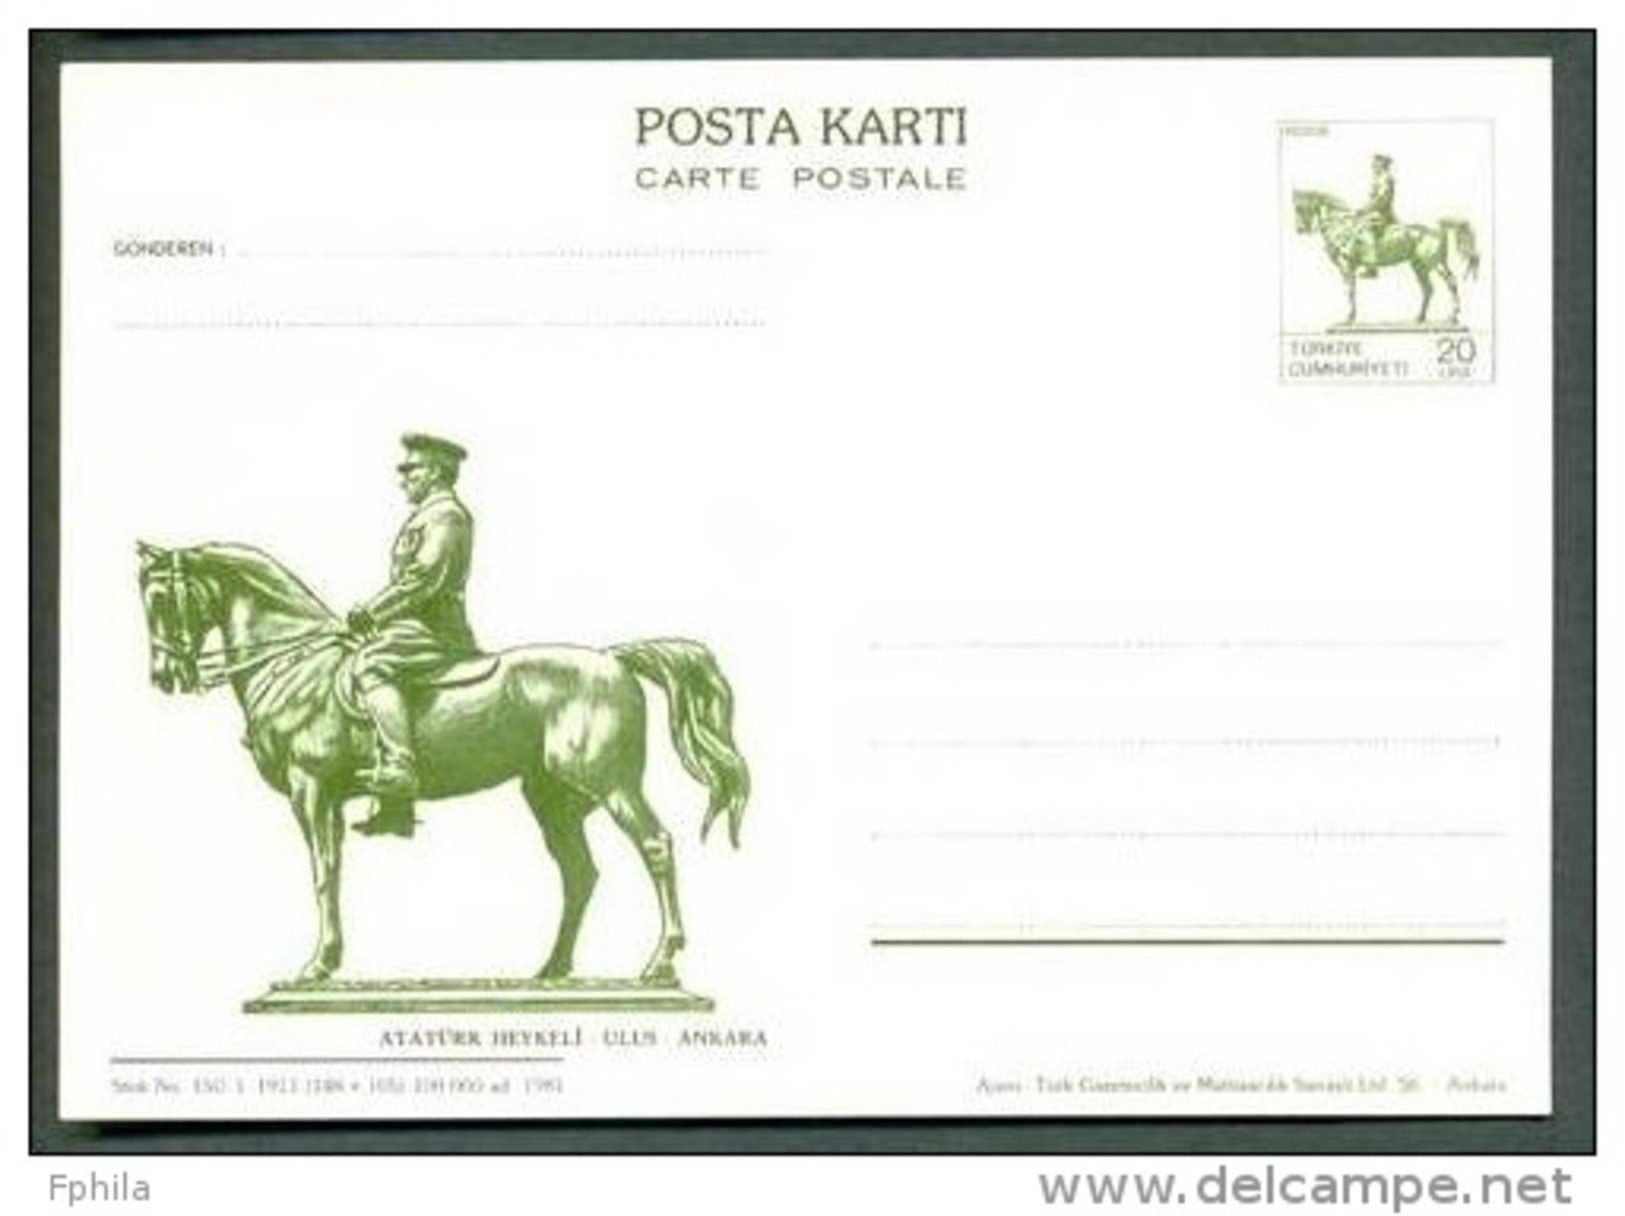 1981 TURKEY ATATURK STATUE (ULUS-ANKARA) POSTCARD - Postal Stationery